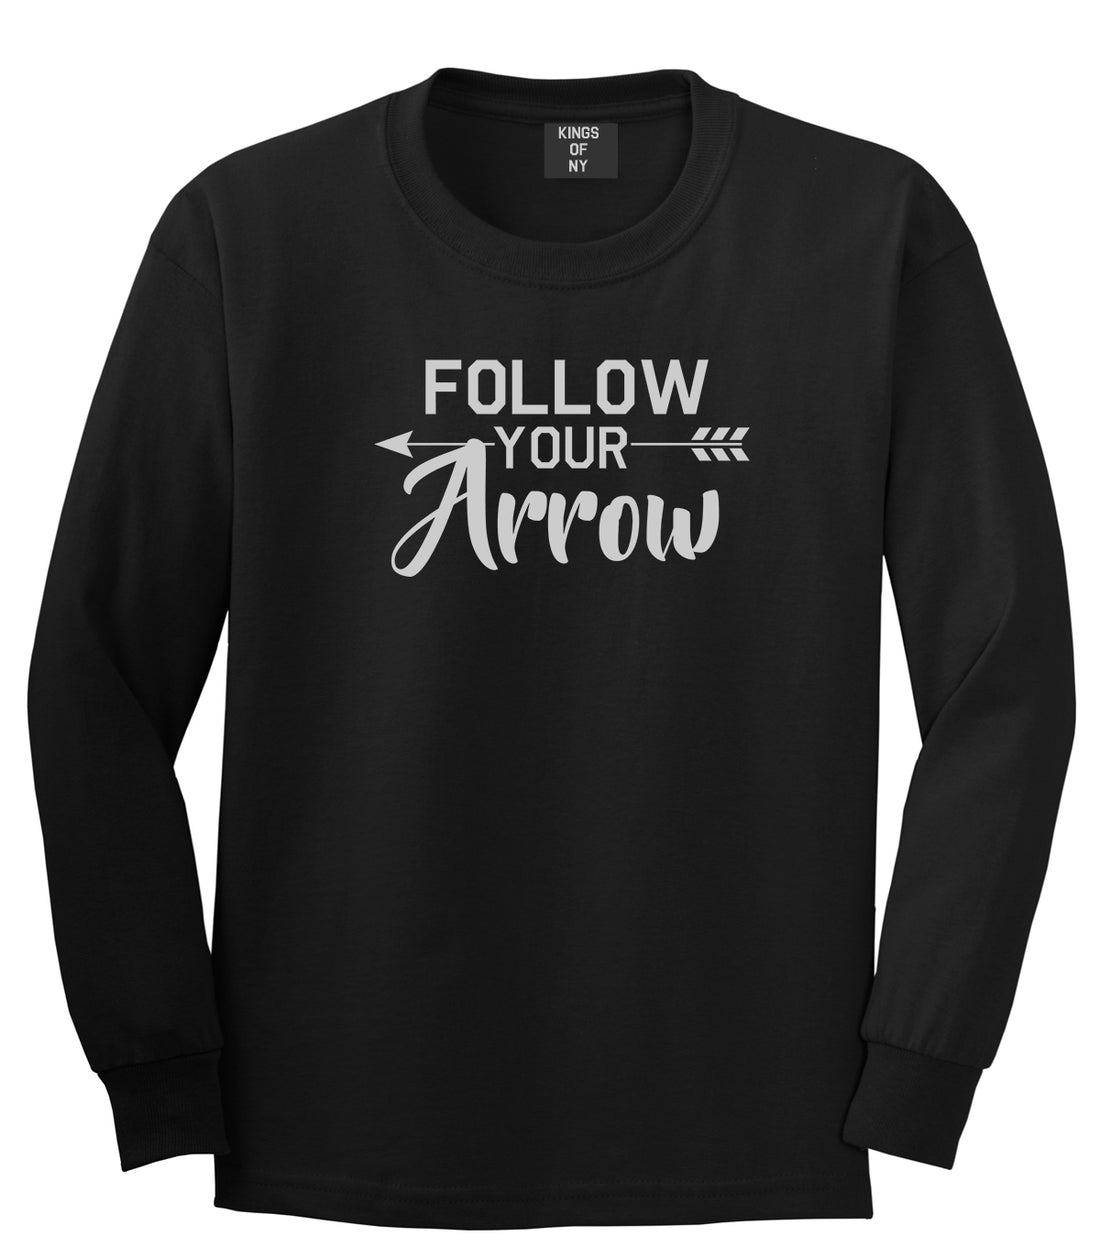 Follow Your Arrow Mens Black Long Sleeve T-Shirt by KINGS OF NY